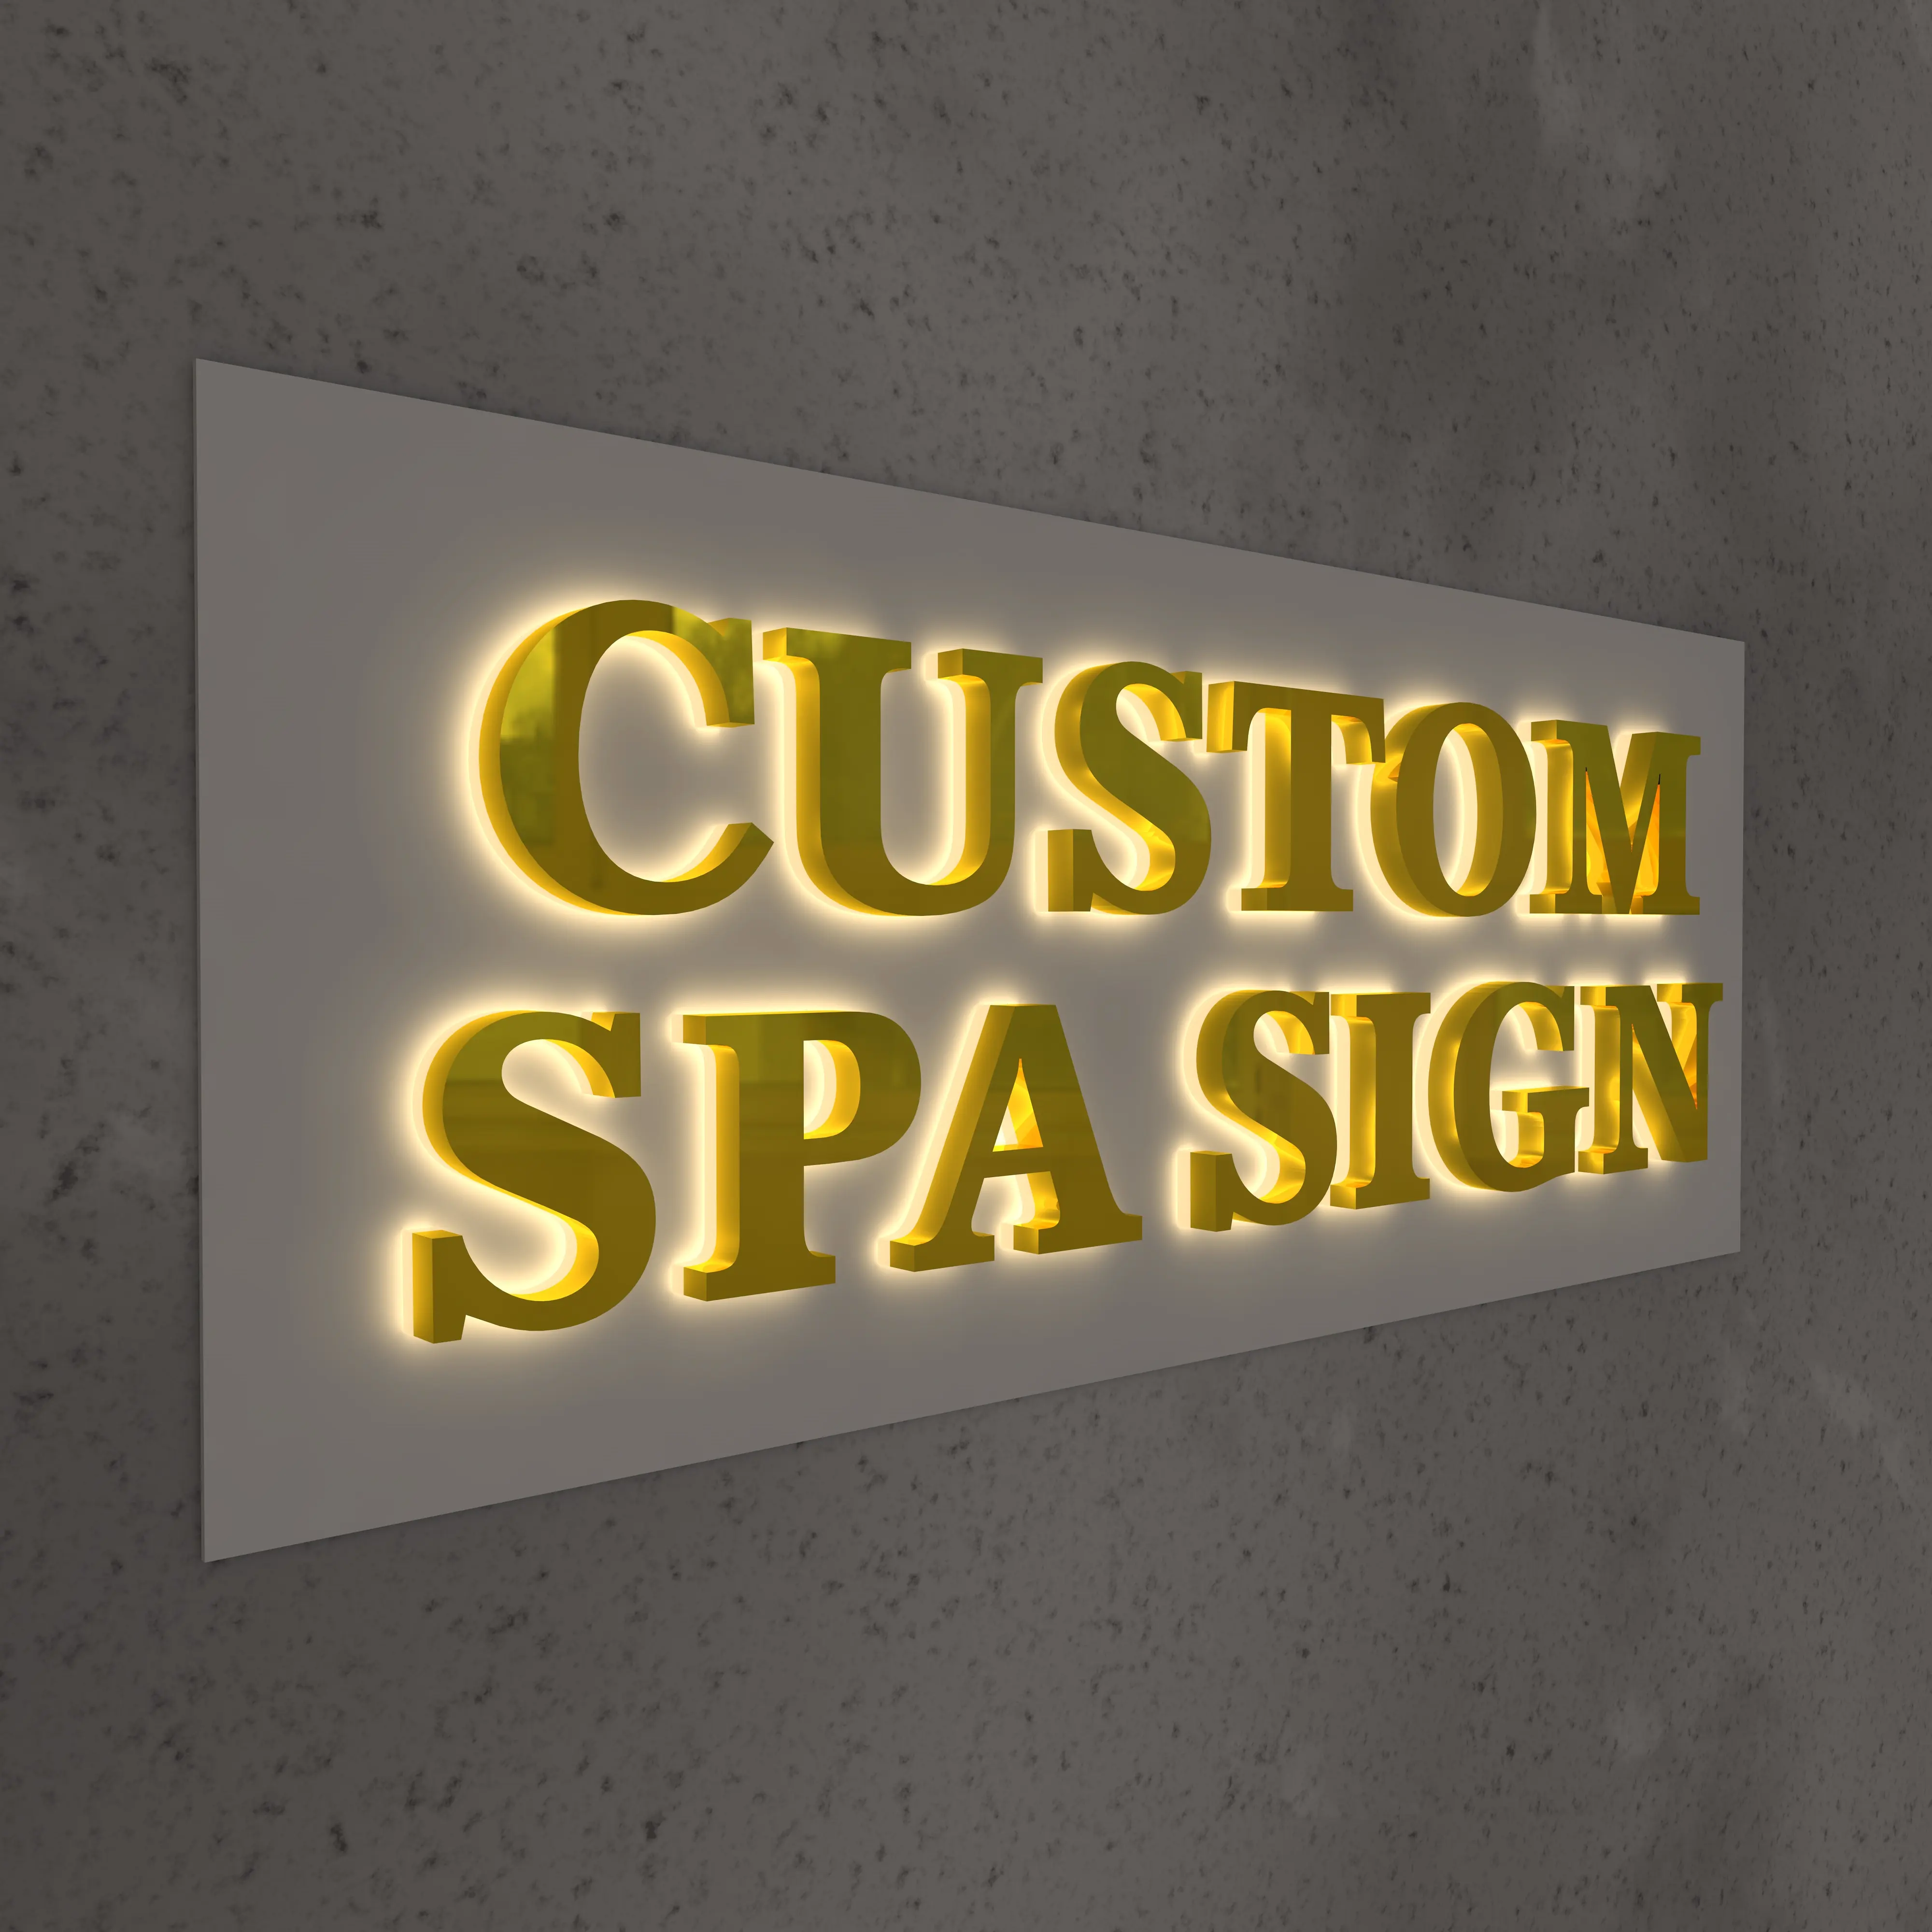 Customized signage backlit dimensional led business sign channel letter sign for custom office sign